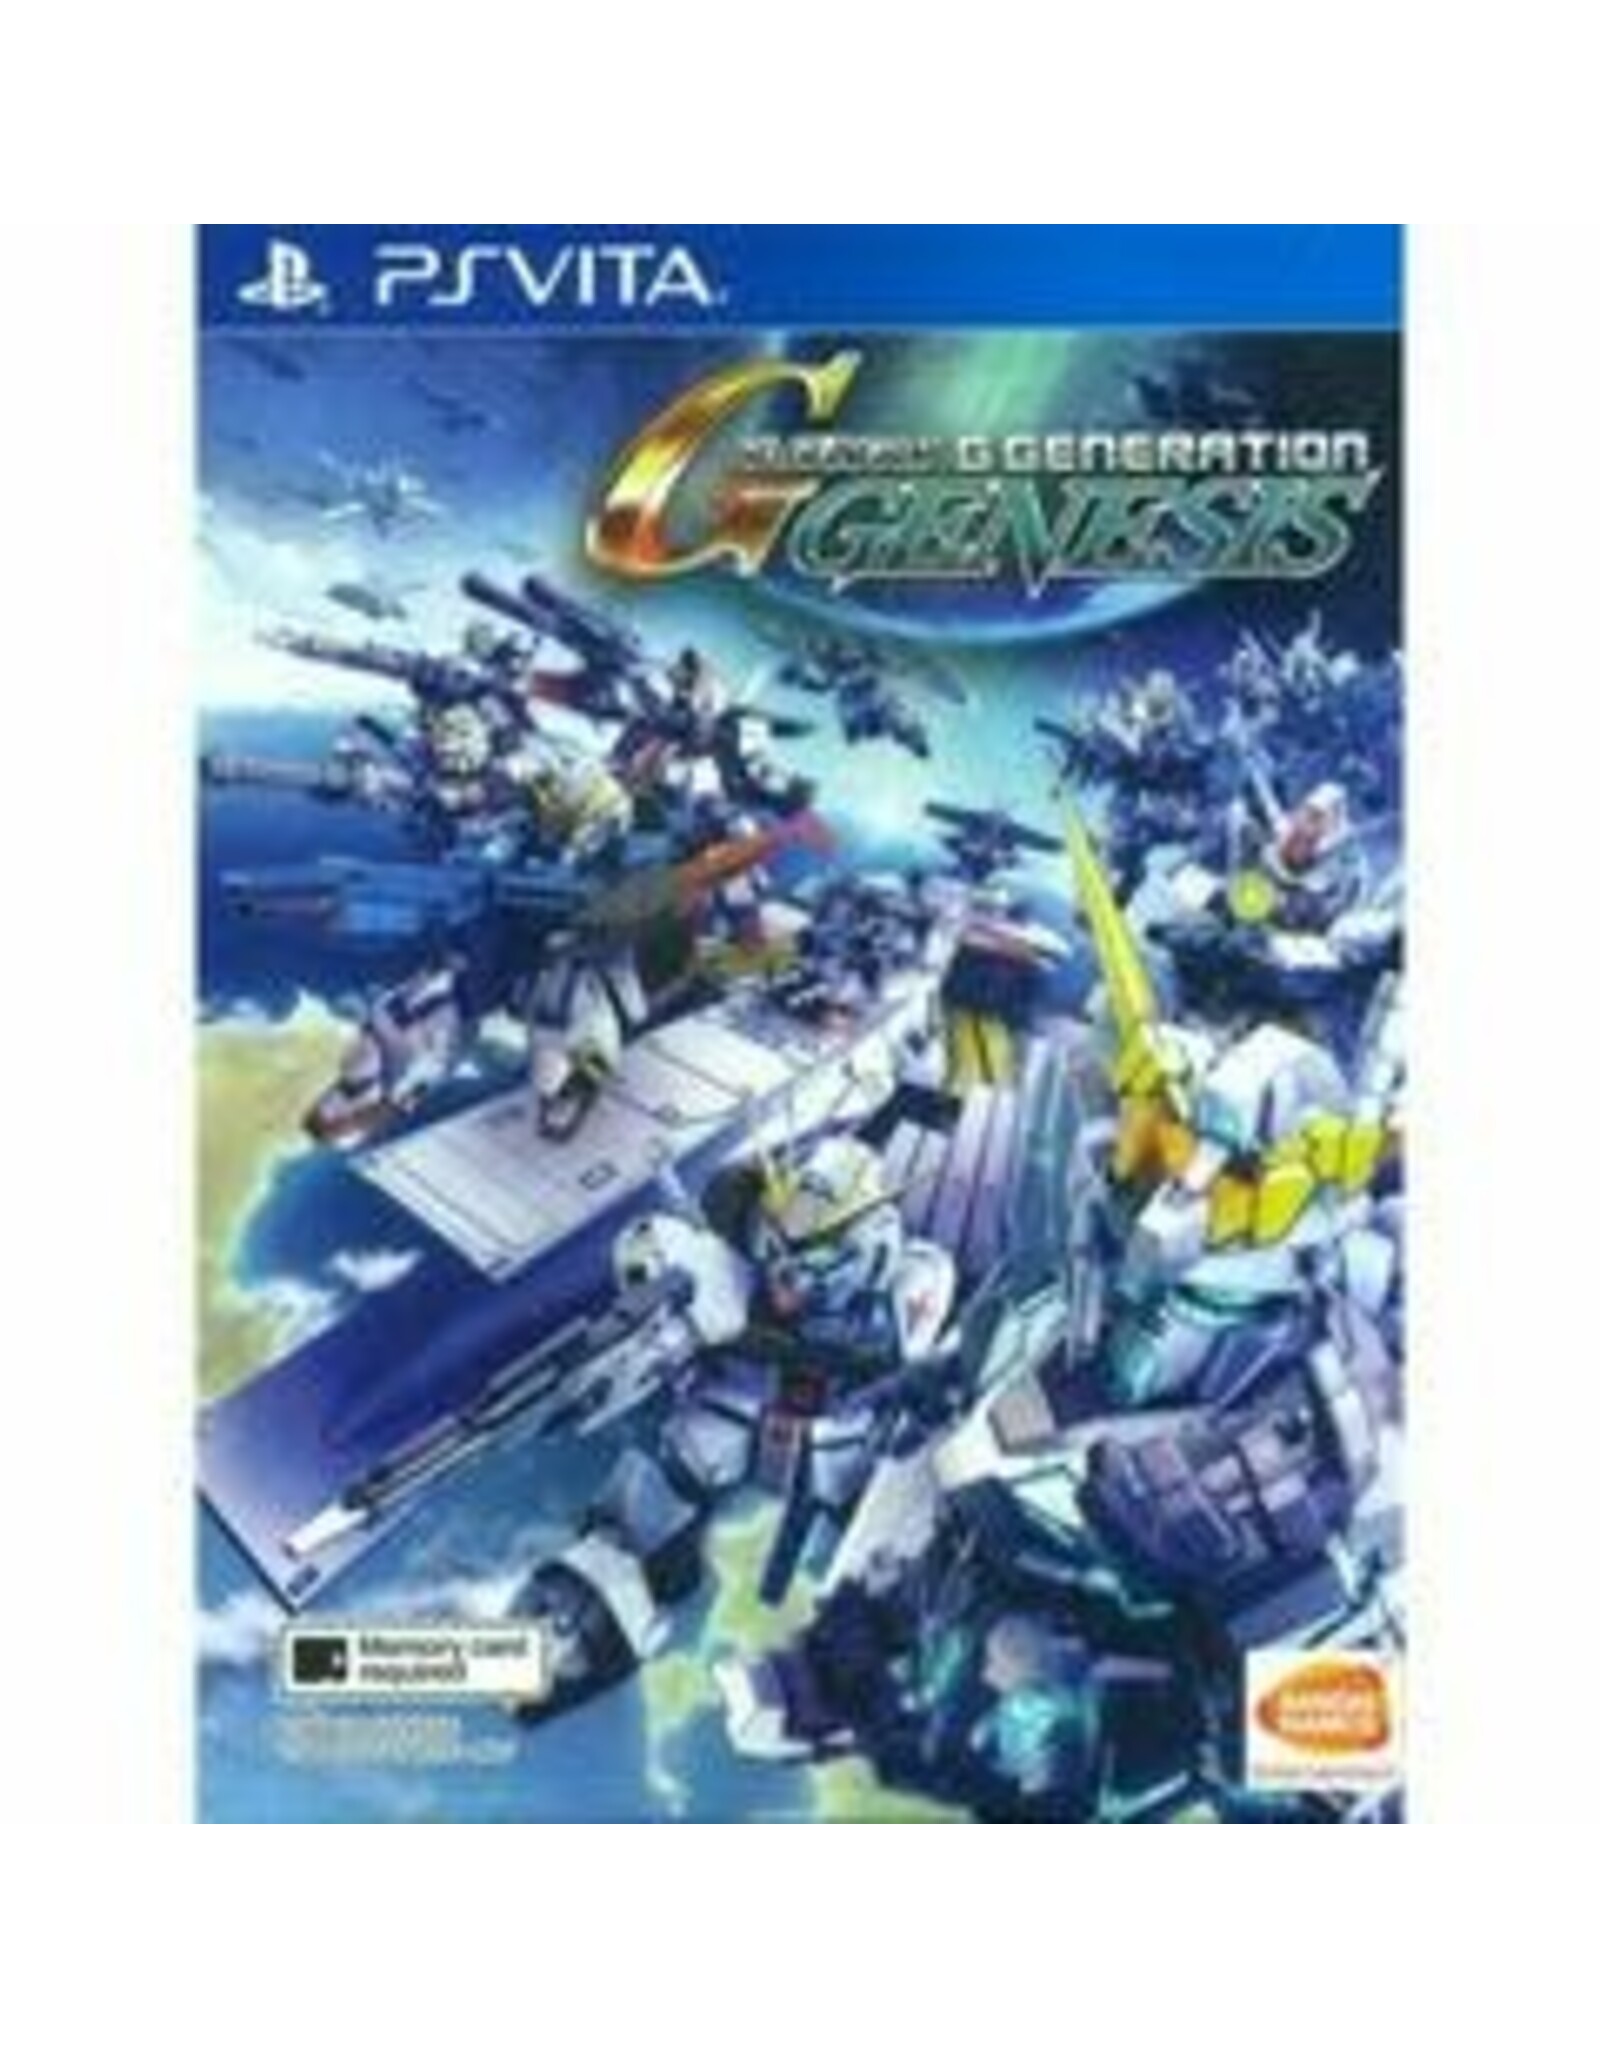 Playstation Vita SD Gundam G Generation Genesis (Carts Only, Asia Import)